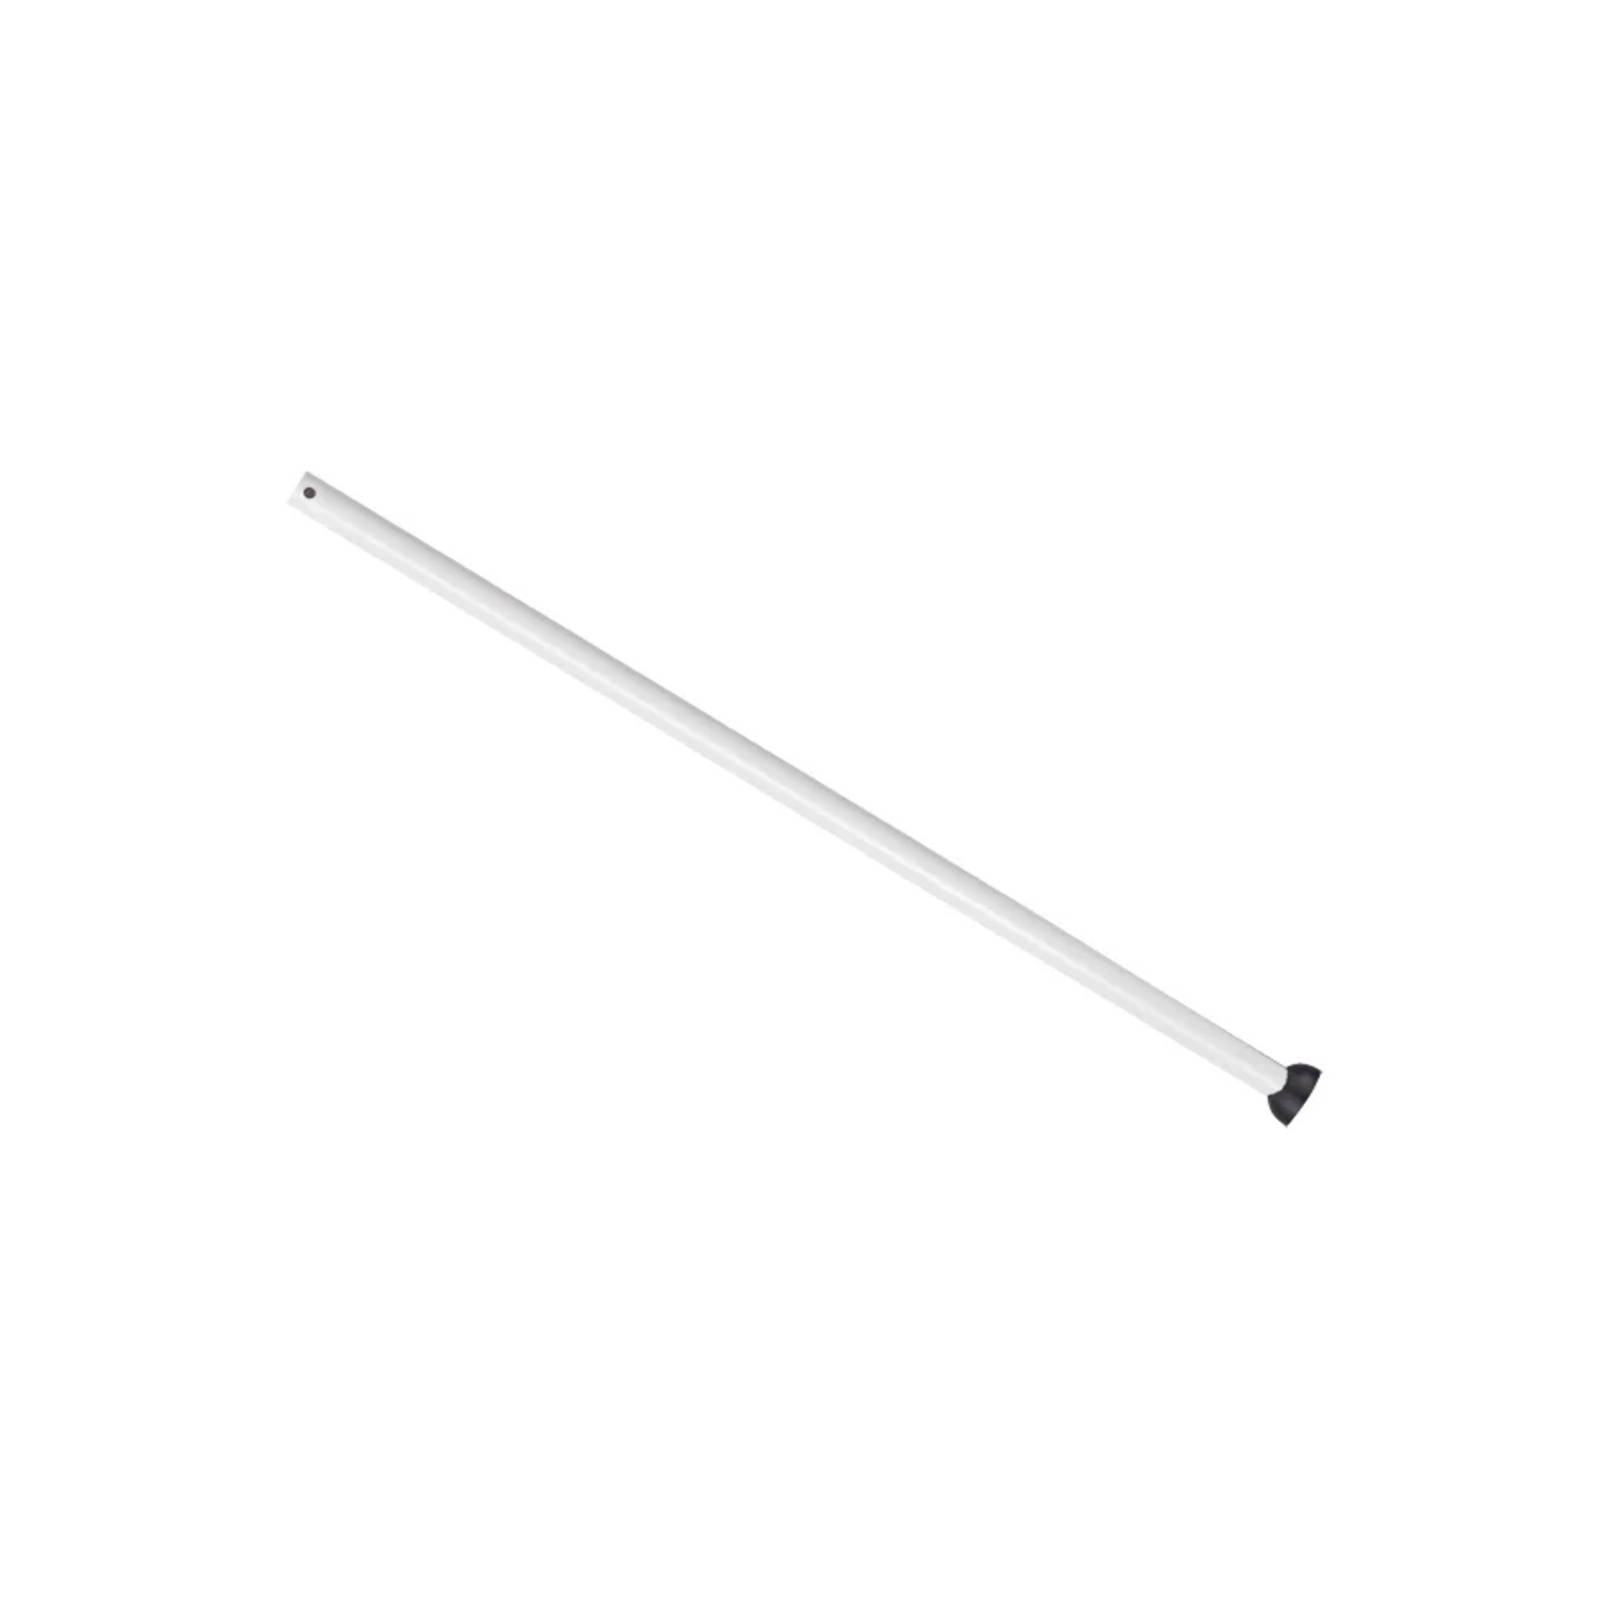 Extension rod for 210544 fans, 90 cm white